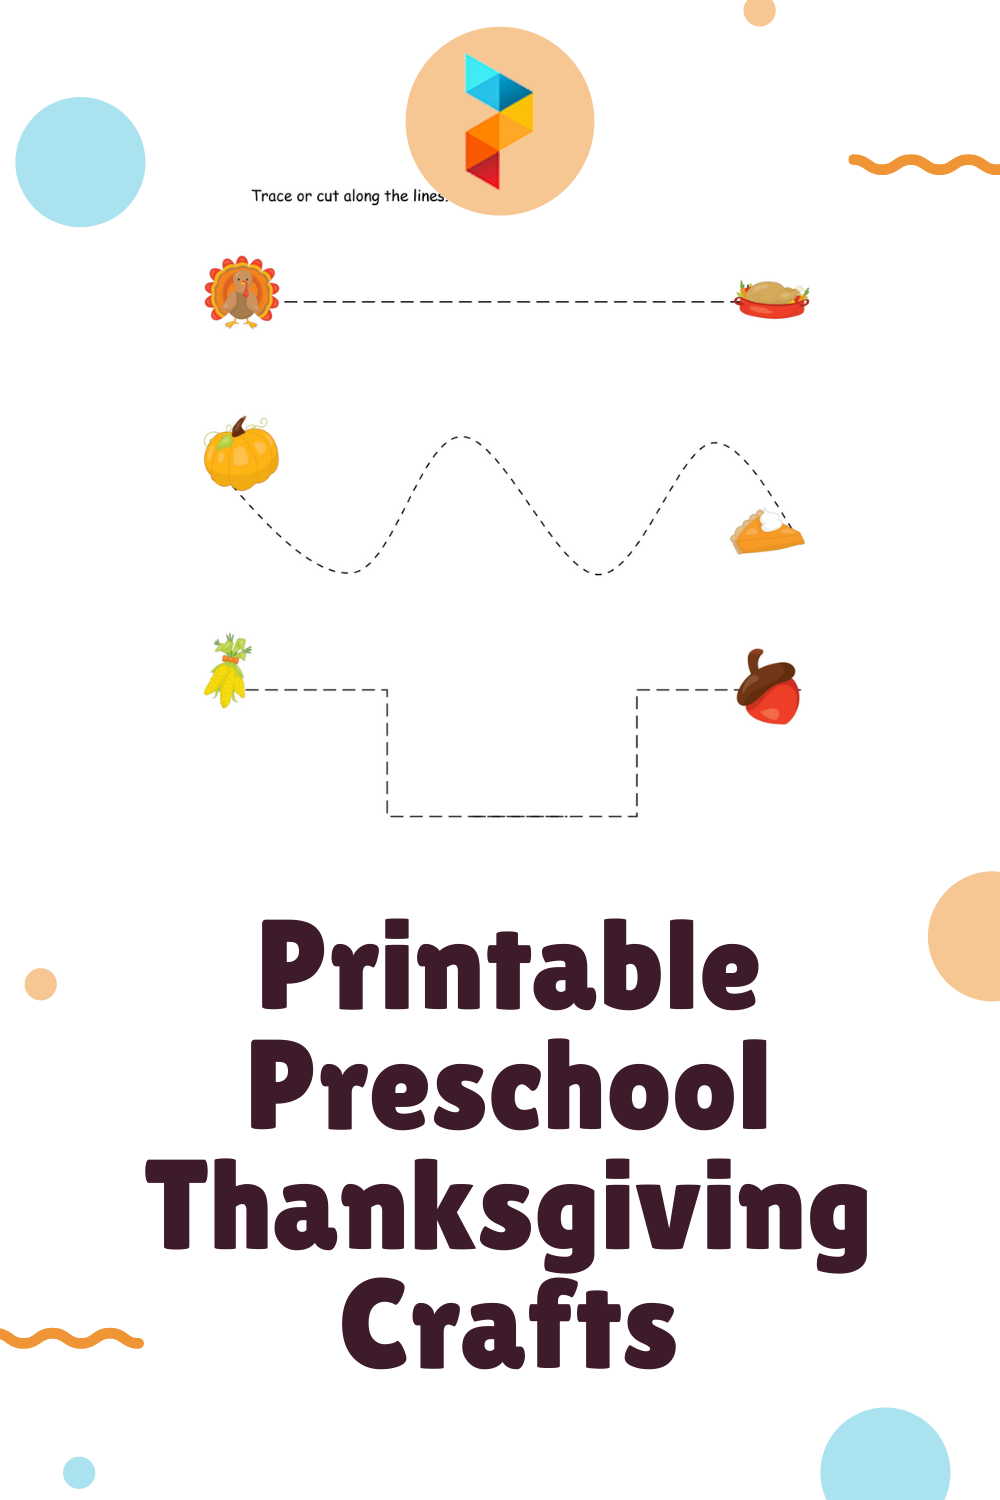 Printable Preschool Thanksgiving Crafts